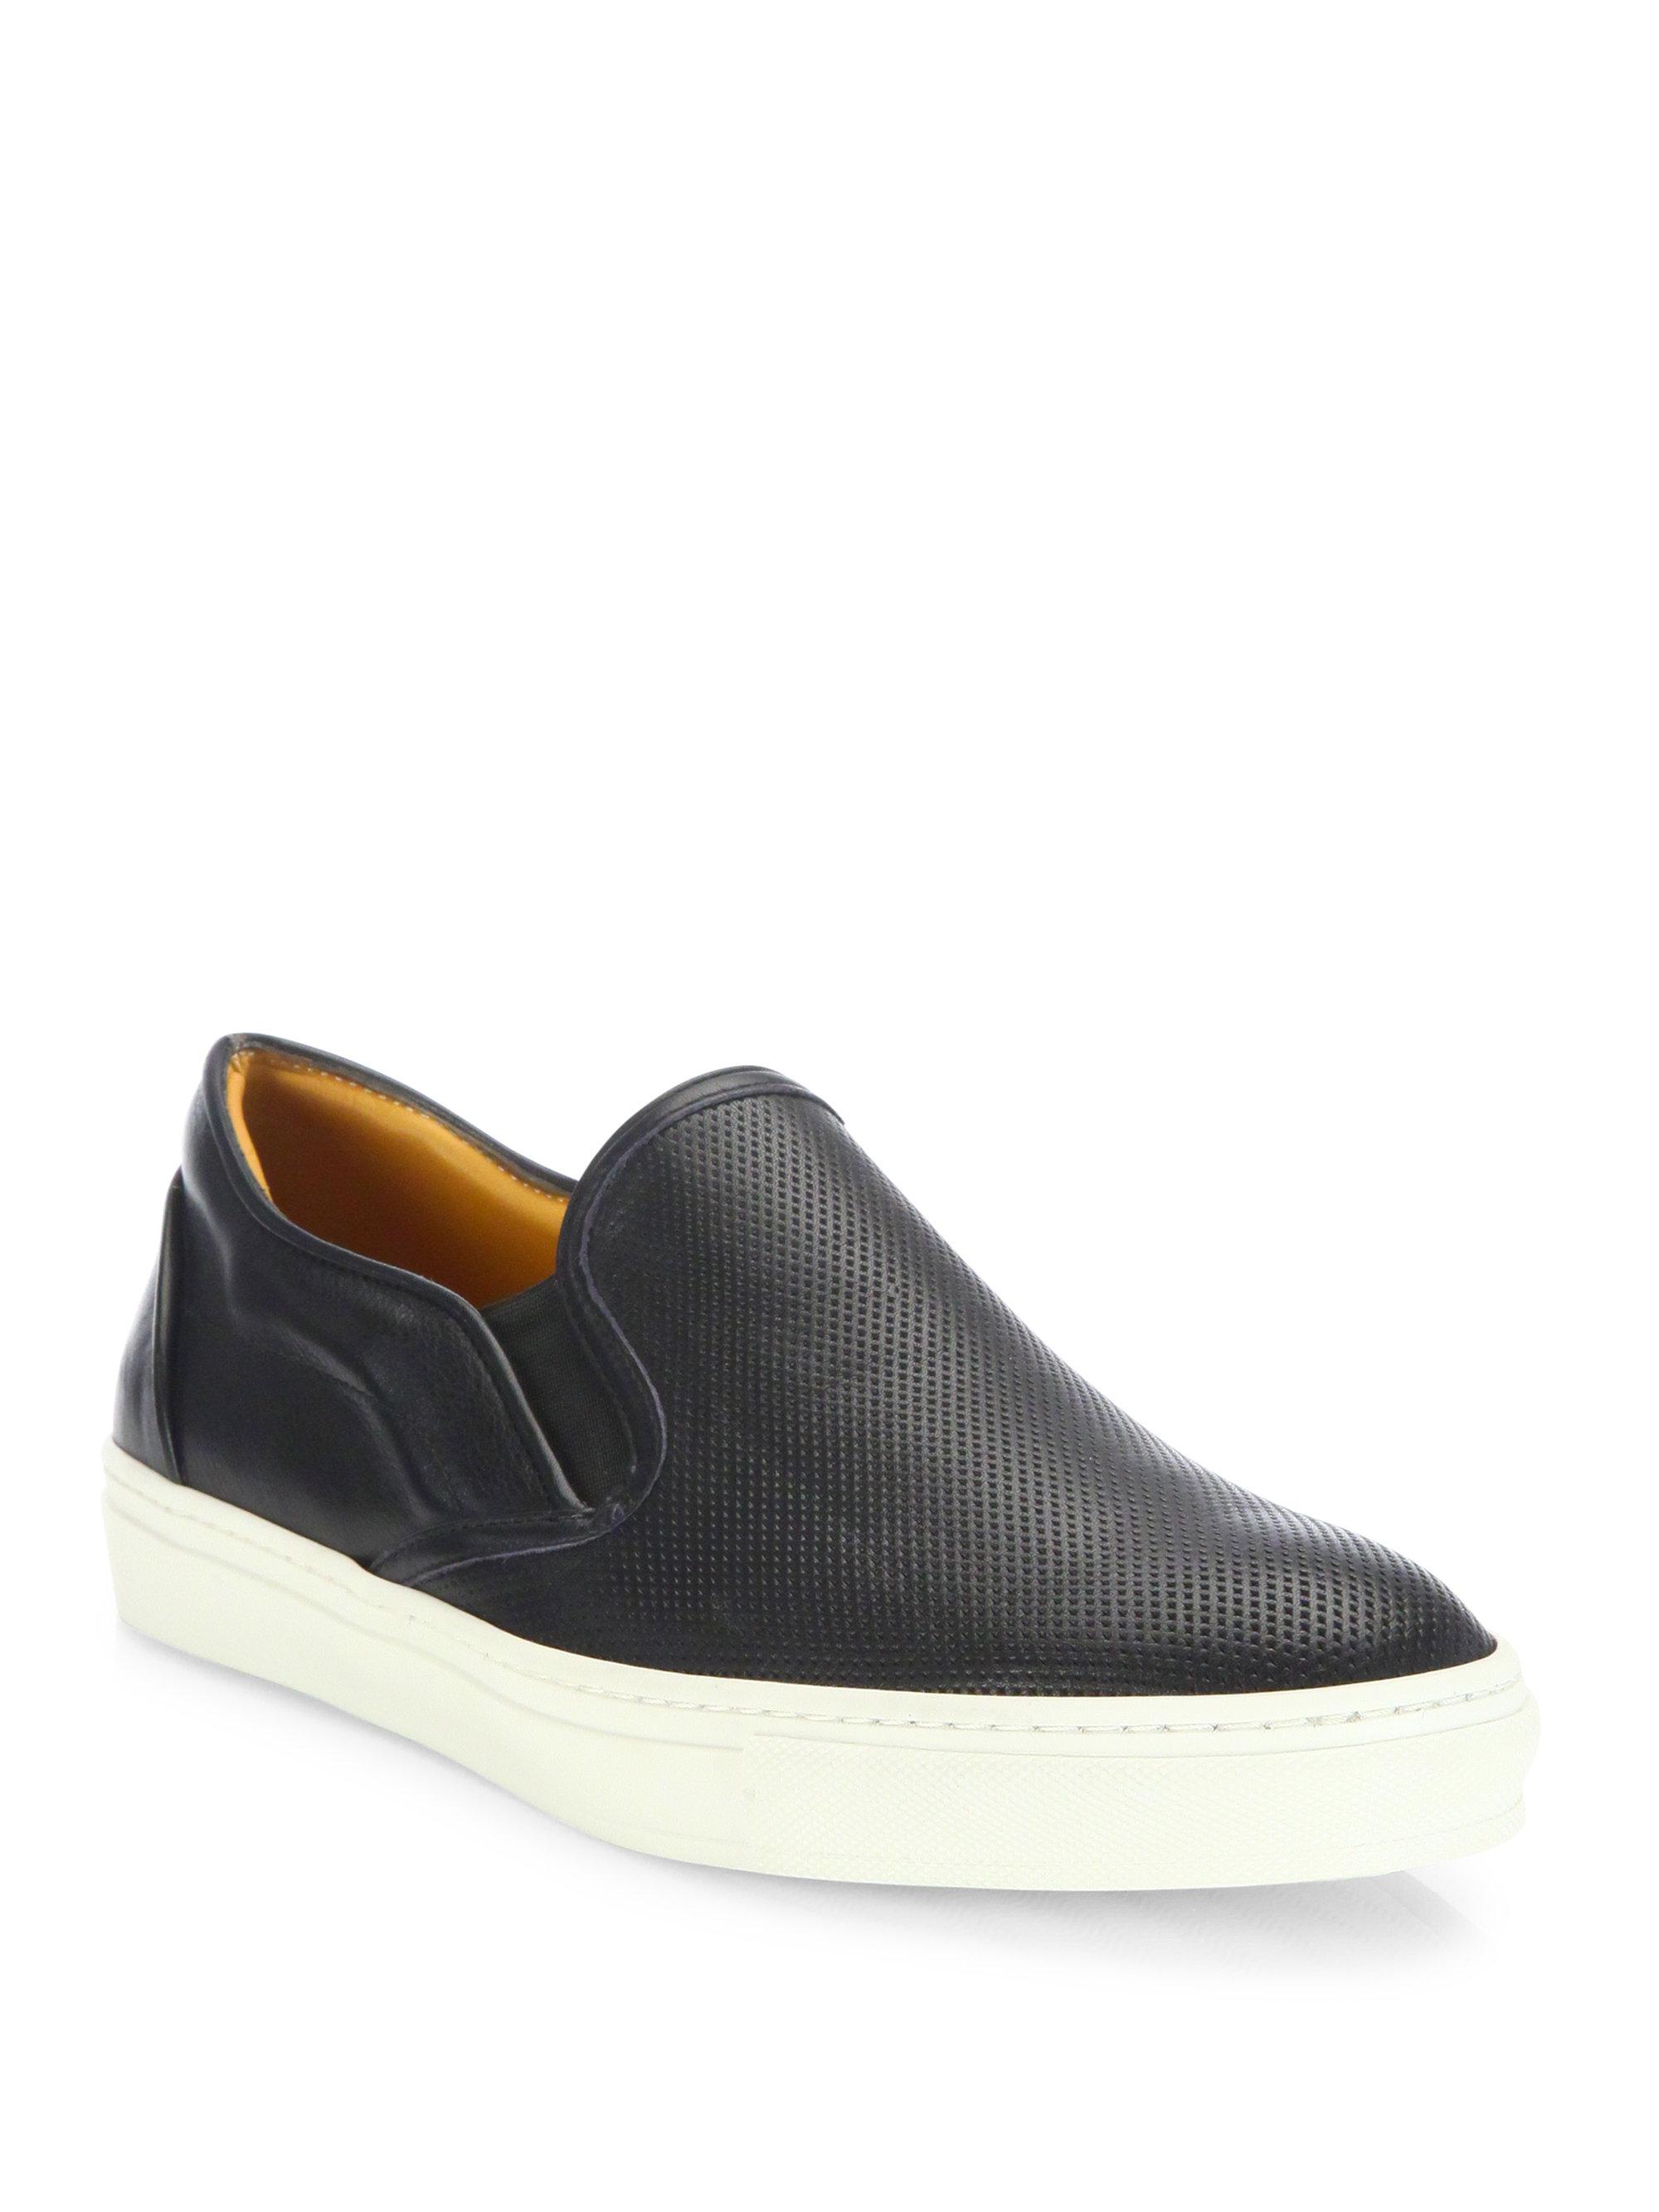 Lyst - Saks Fifth Avenue Leather Slip-on Sneakers in Black for Men